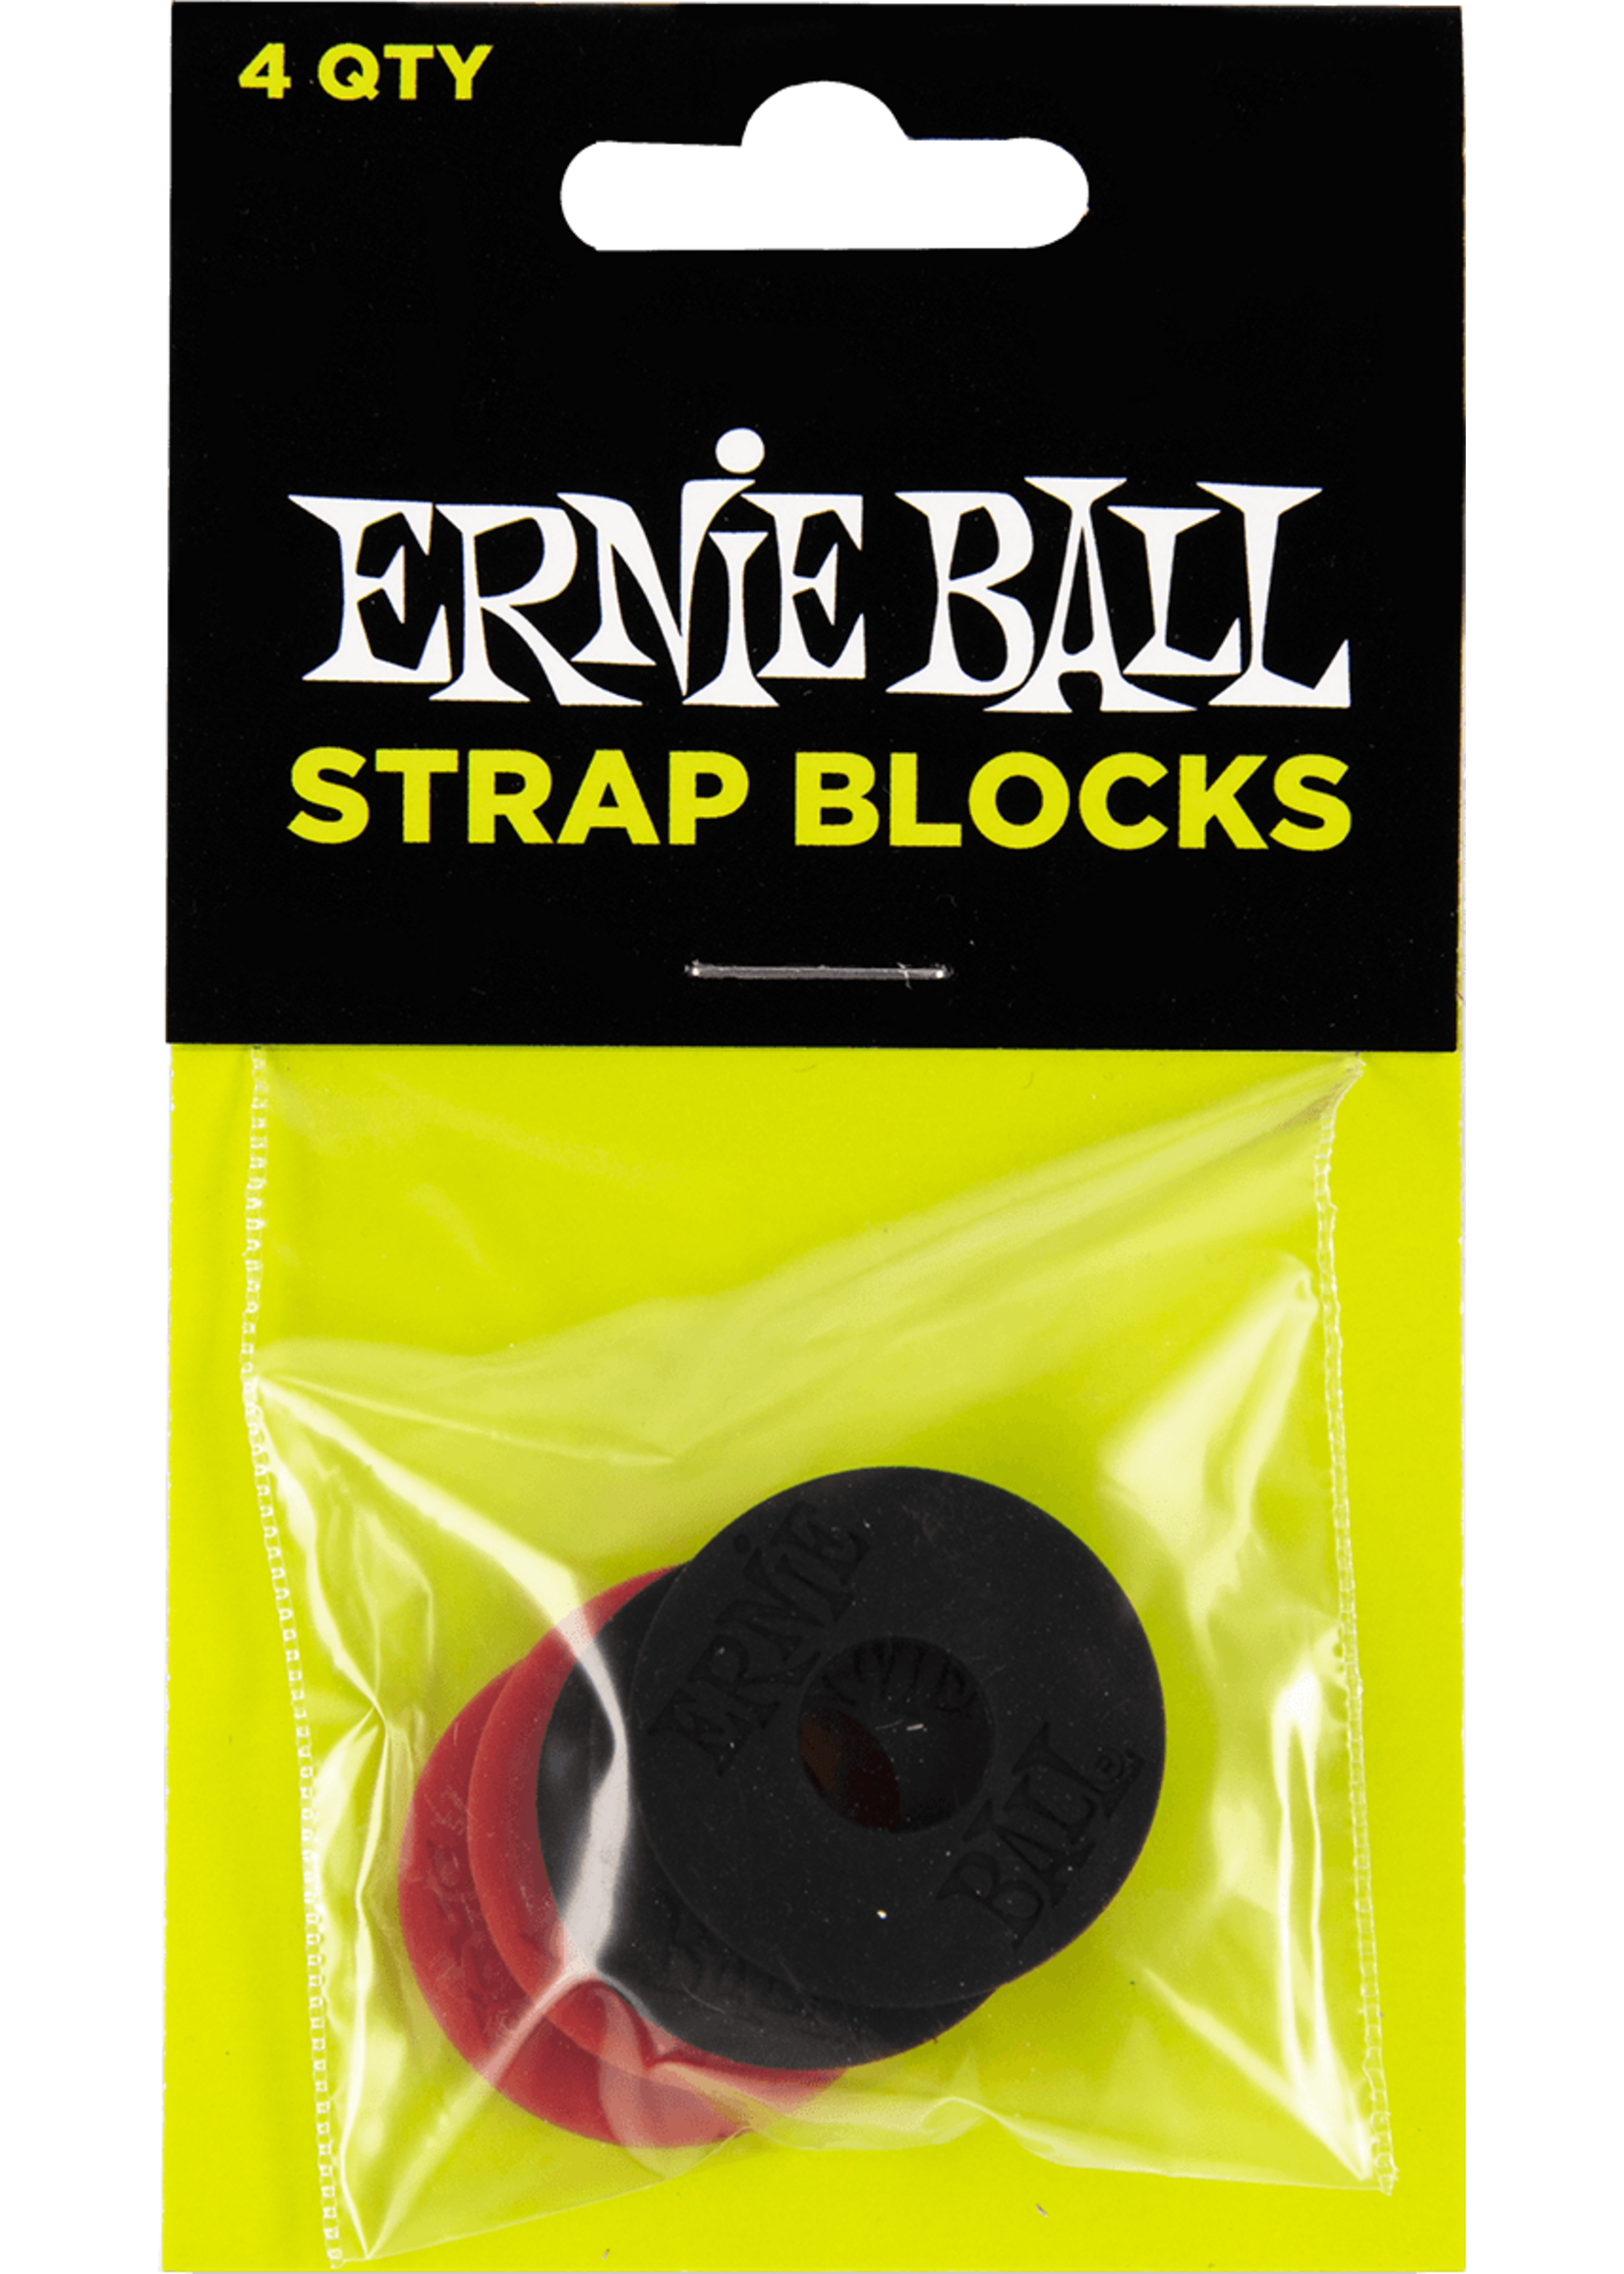 Ernie Ball ERNIE BALL Strap Locks AEB 4603 Pack with 4 strap locks